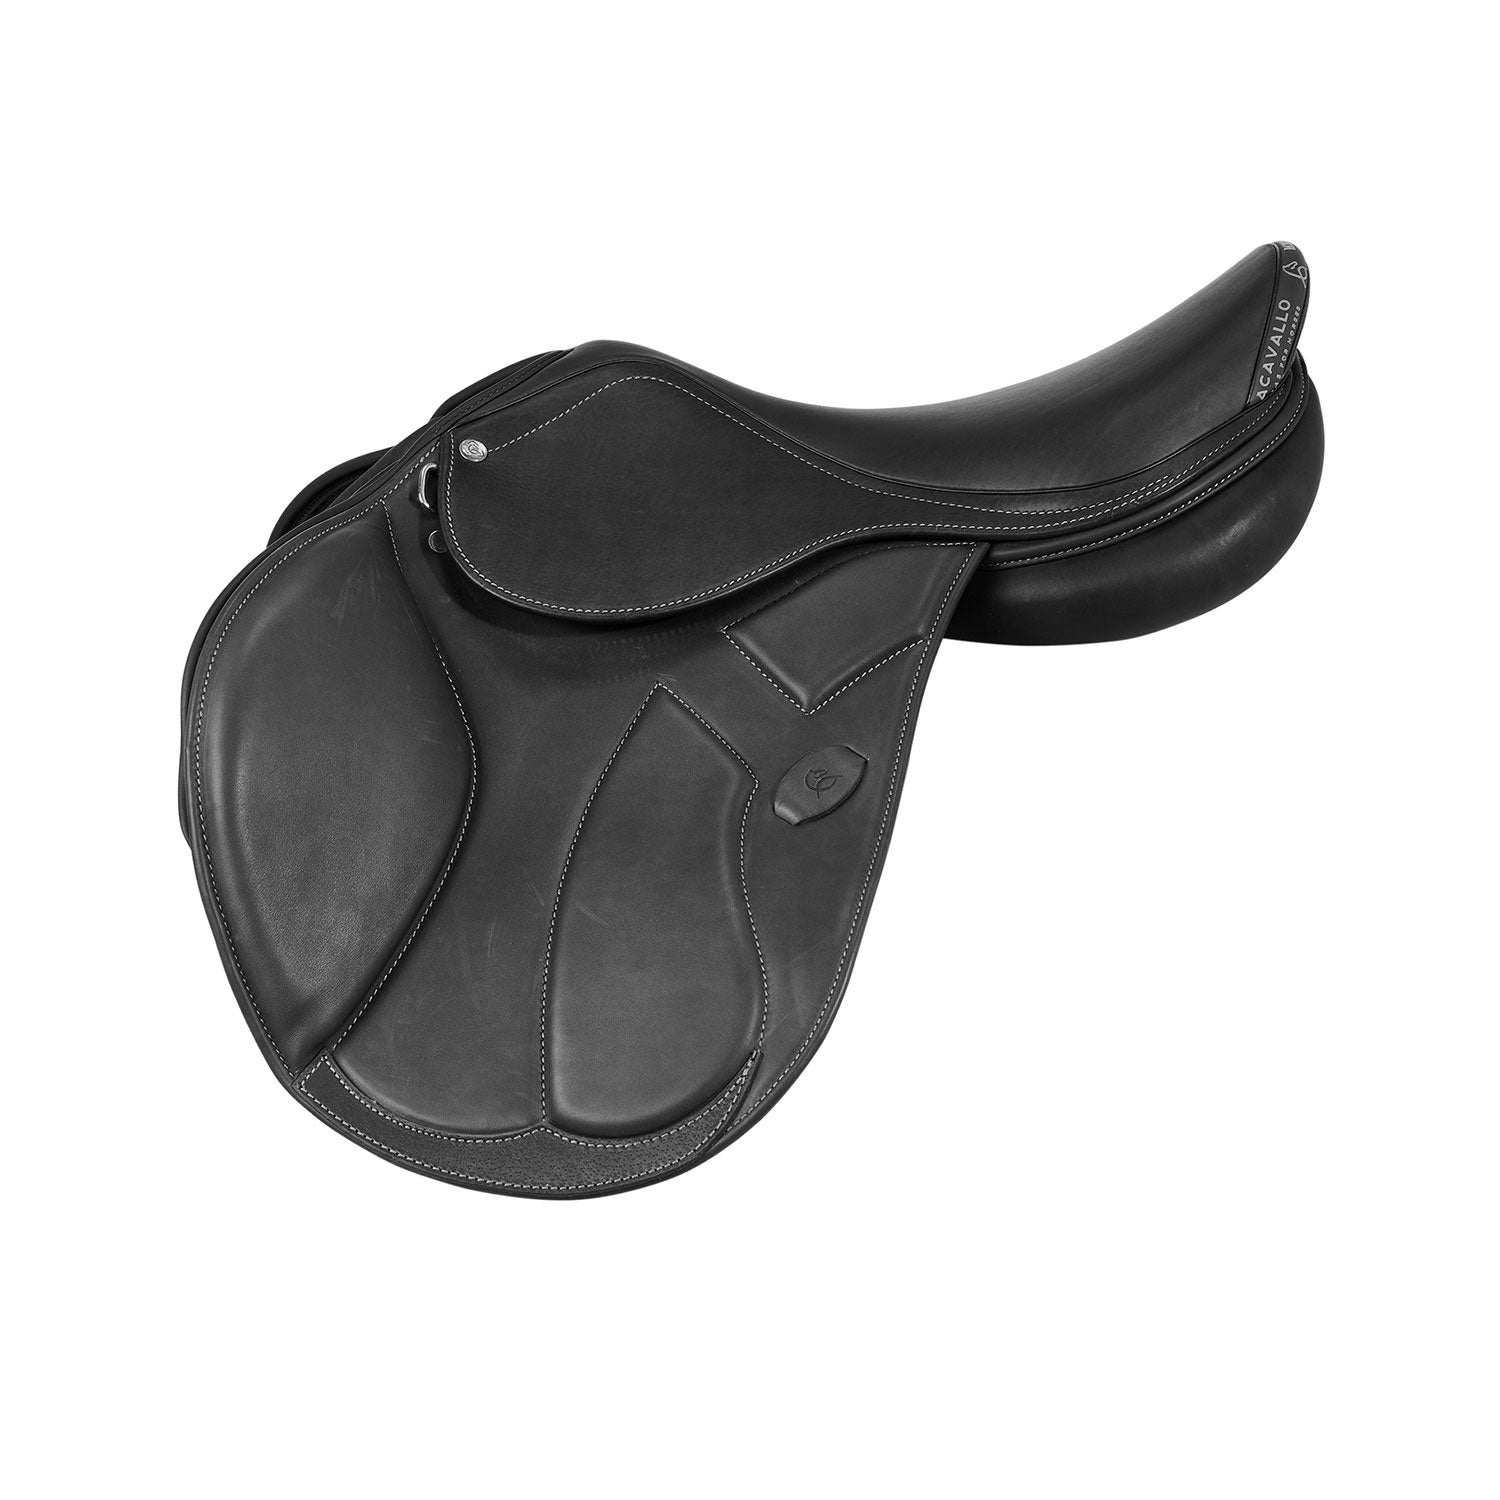 Springsattel Modigliani jumping saddle latex panels - Reitstiefel Kandel - Dein Reitshop